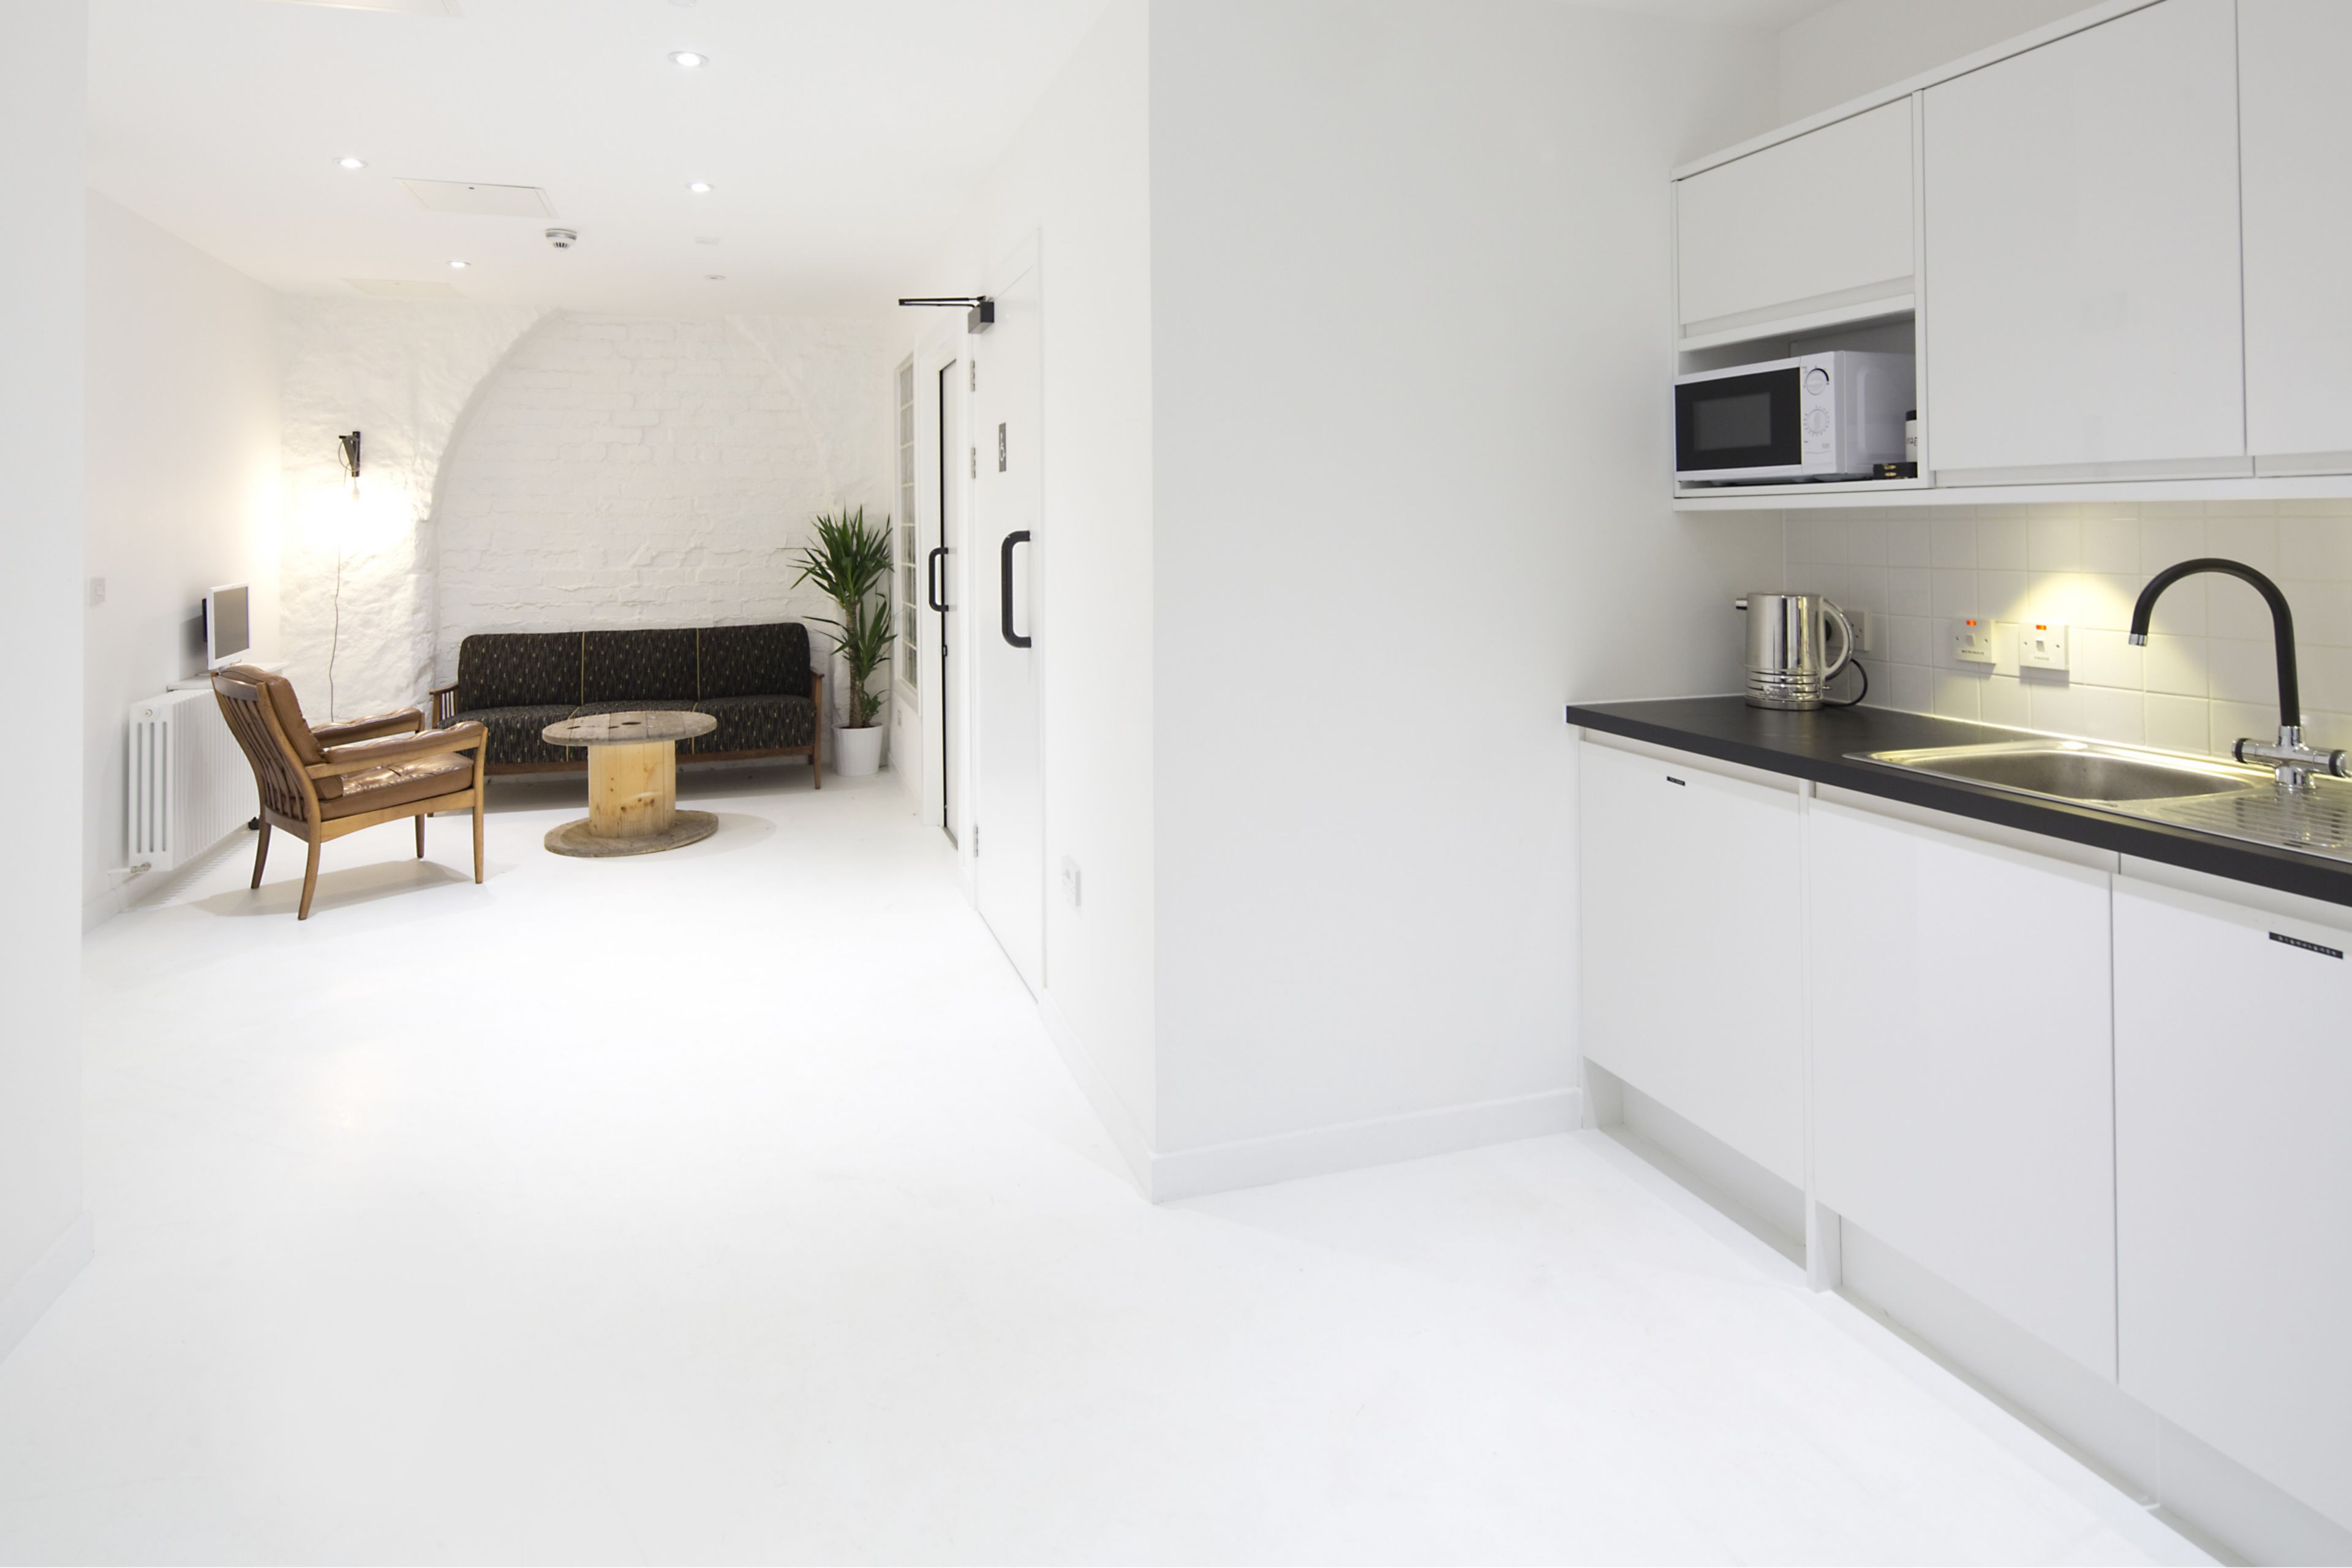 Sika ComfortFloor® white floor in completely white interior of home kitchen